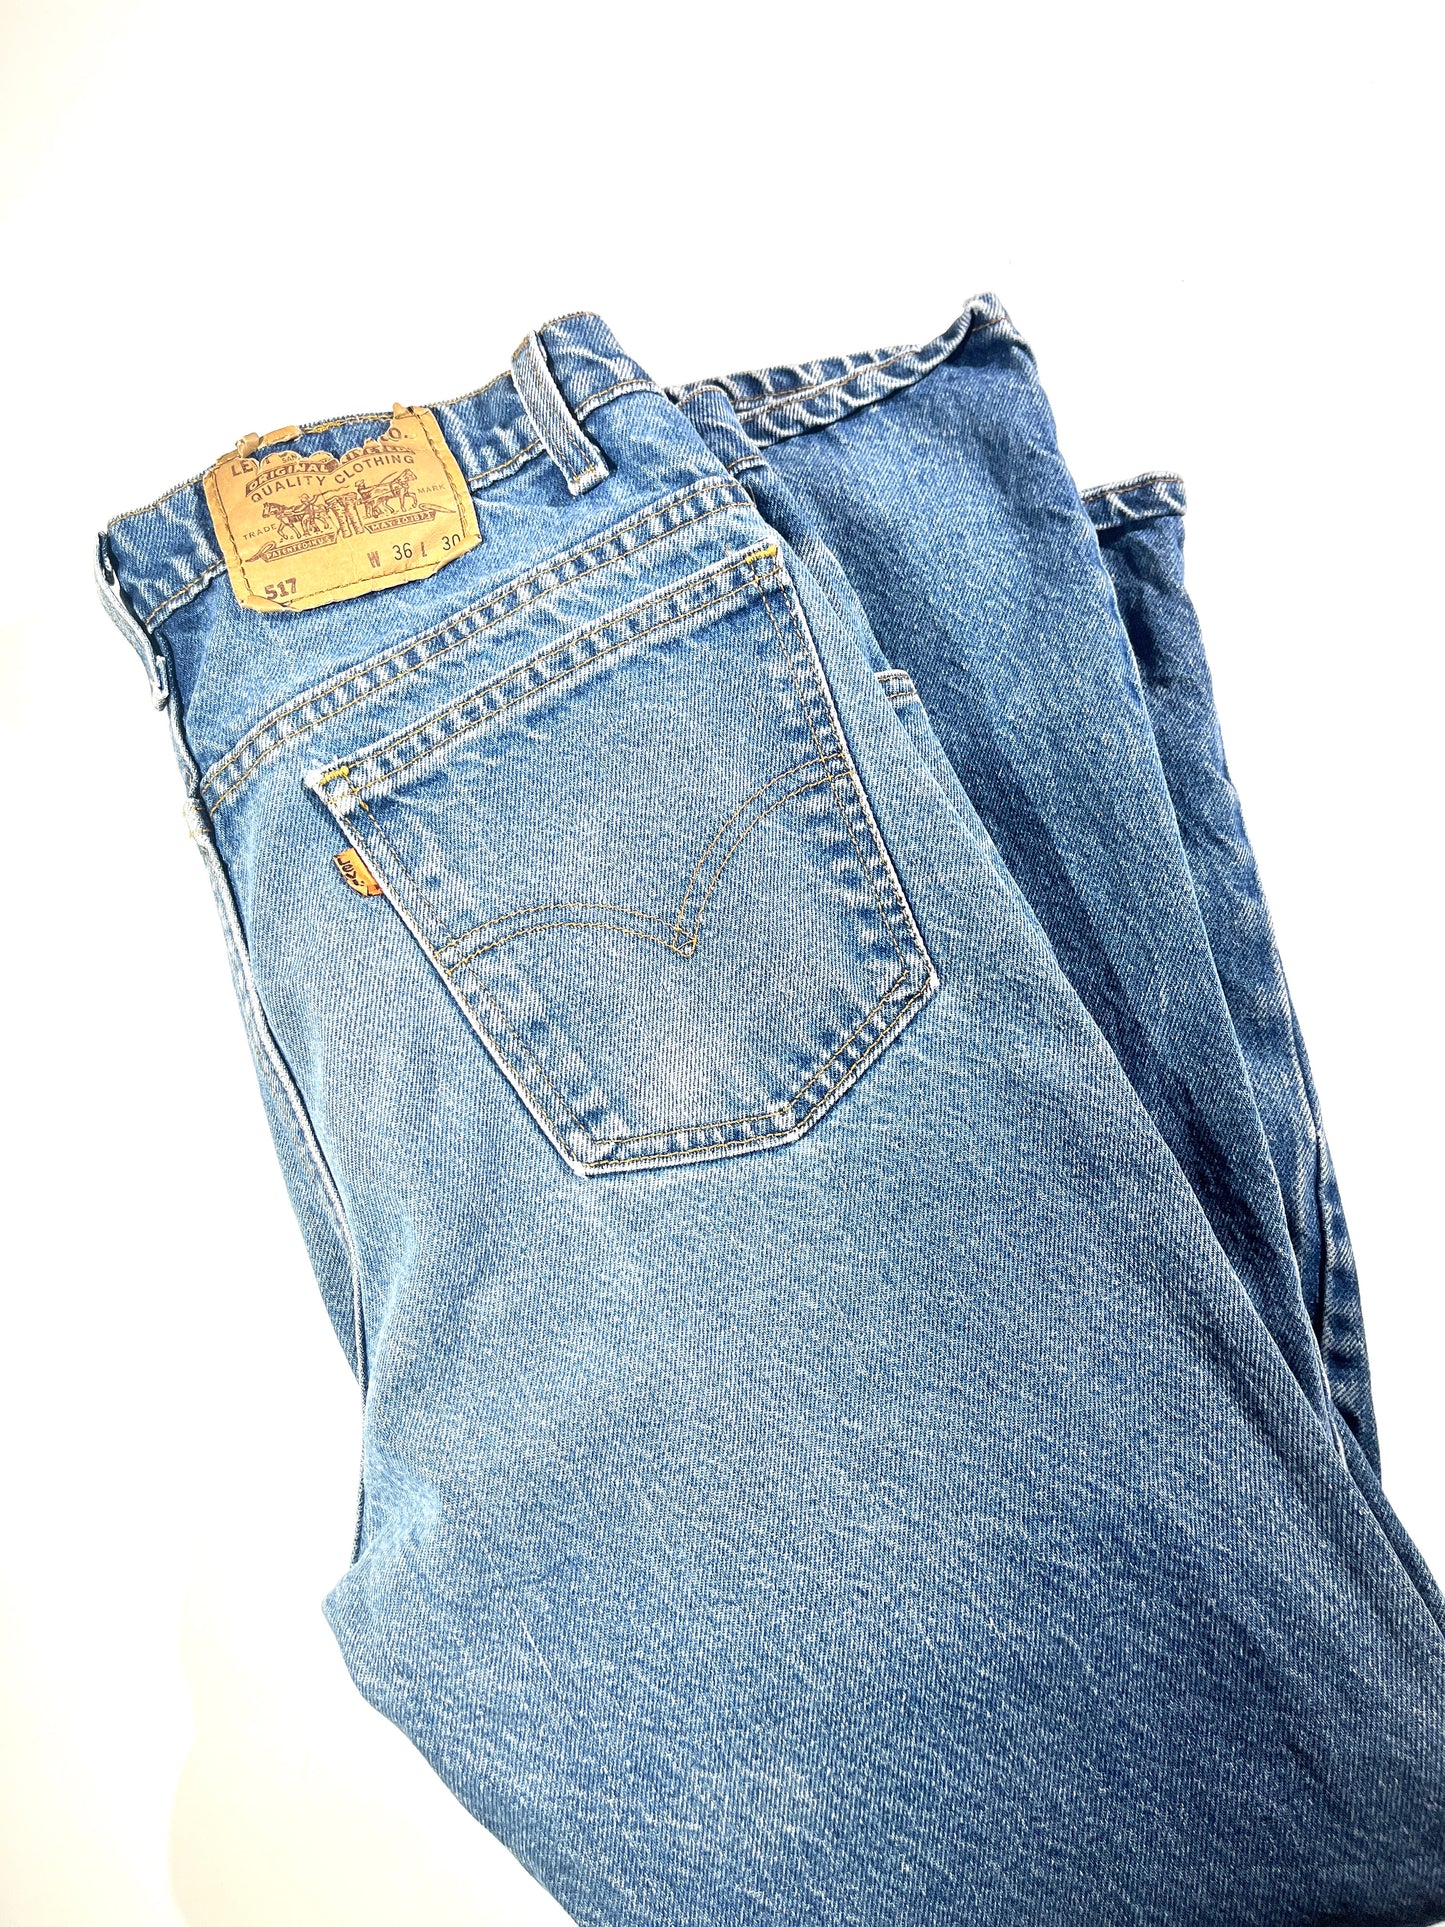 Vintage Levis Jeans Orange Tab 80's Denim USA Made